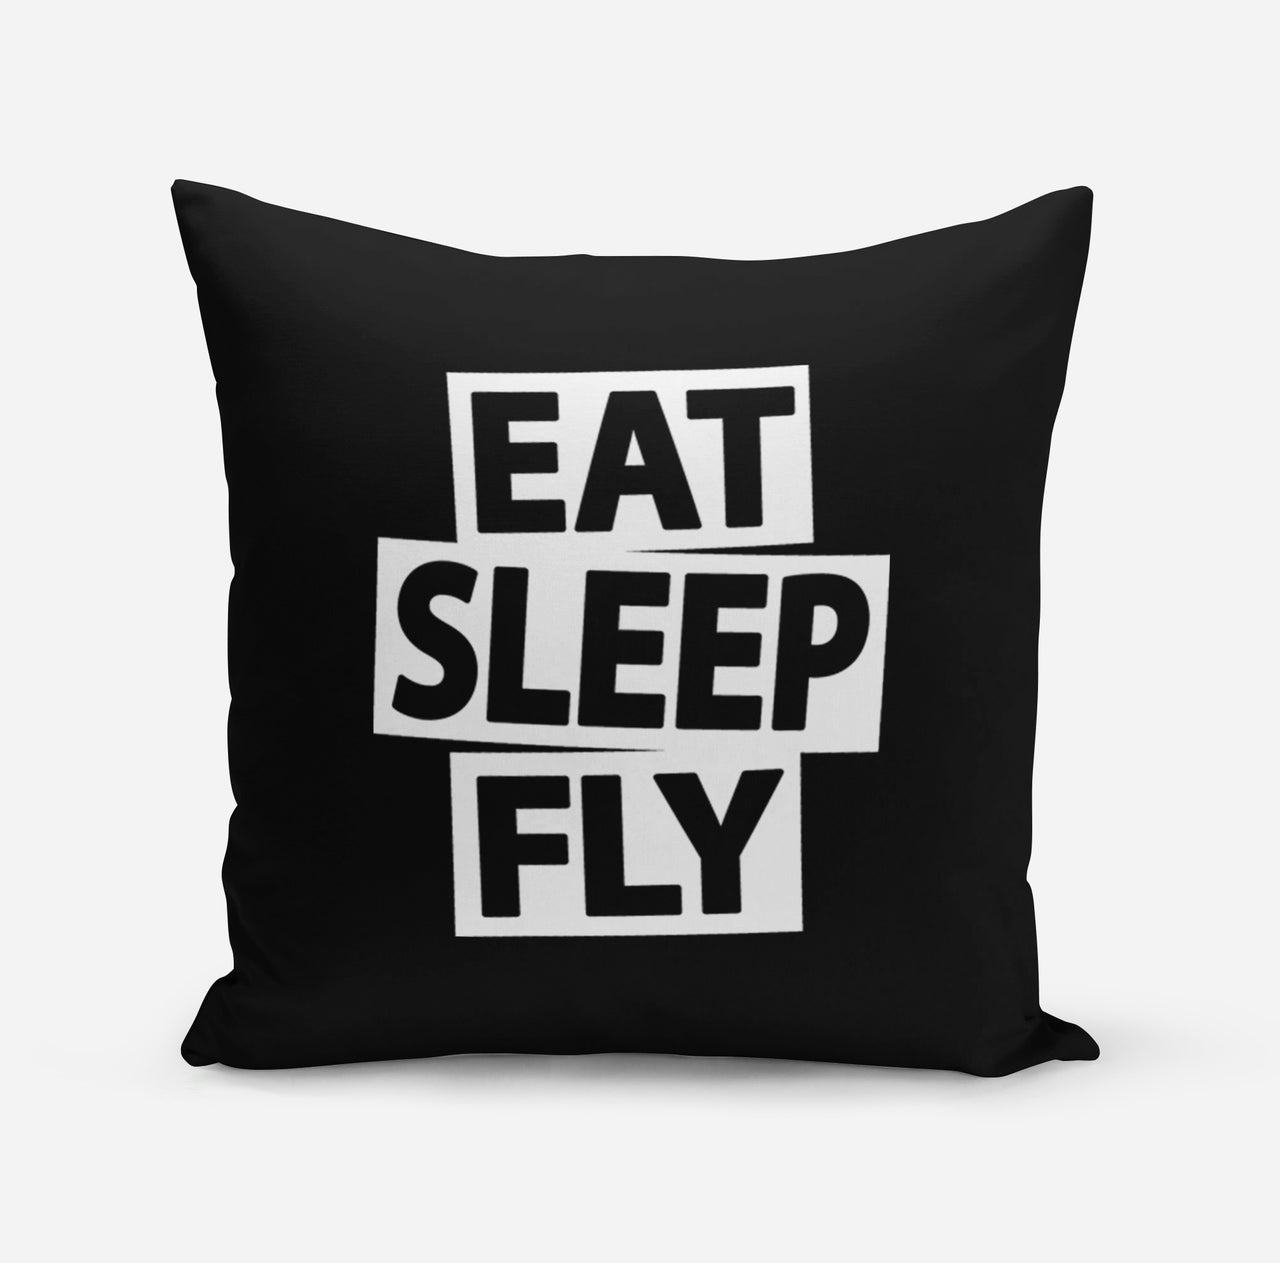 Eat Sleep Fly Designed Pillows